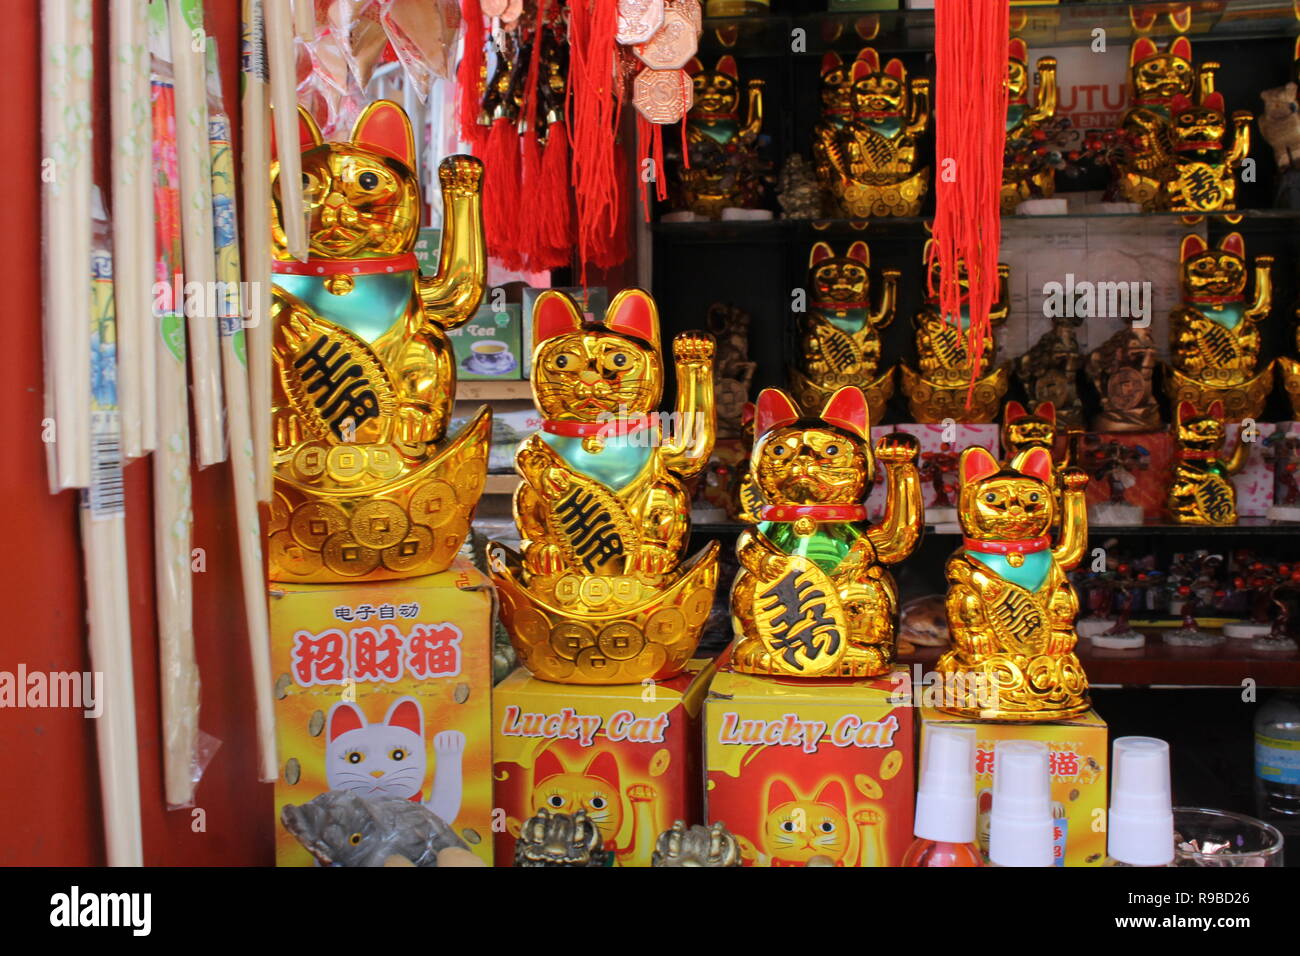 Cinese negozio di souvenir in stallo Latam // puesto de tienda de souvenir chinosi en Latinoamérica Foto Stock